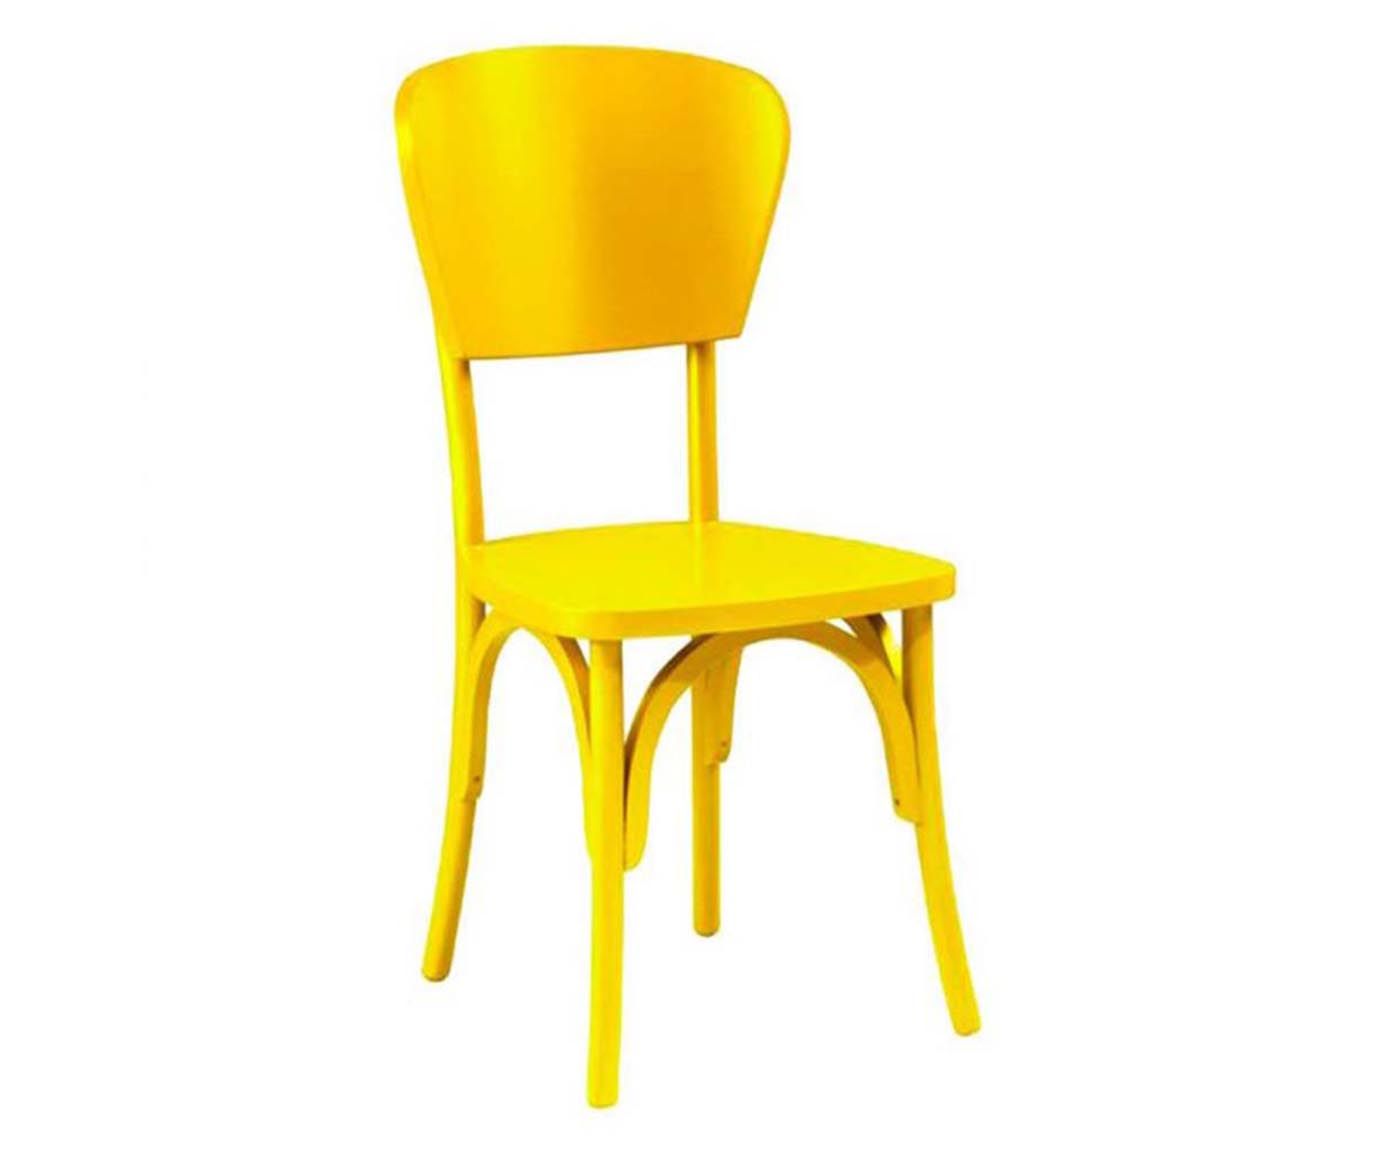 Cadeira romarin plank - soleil | Westwing.com.br